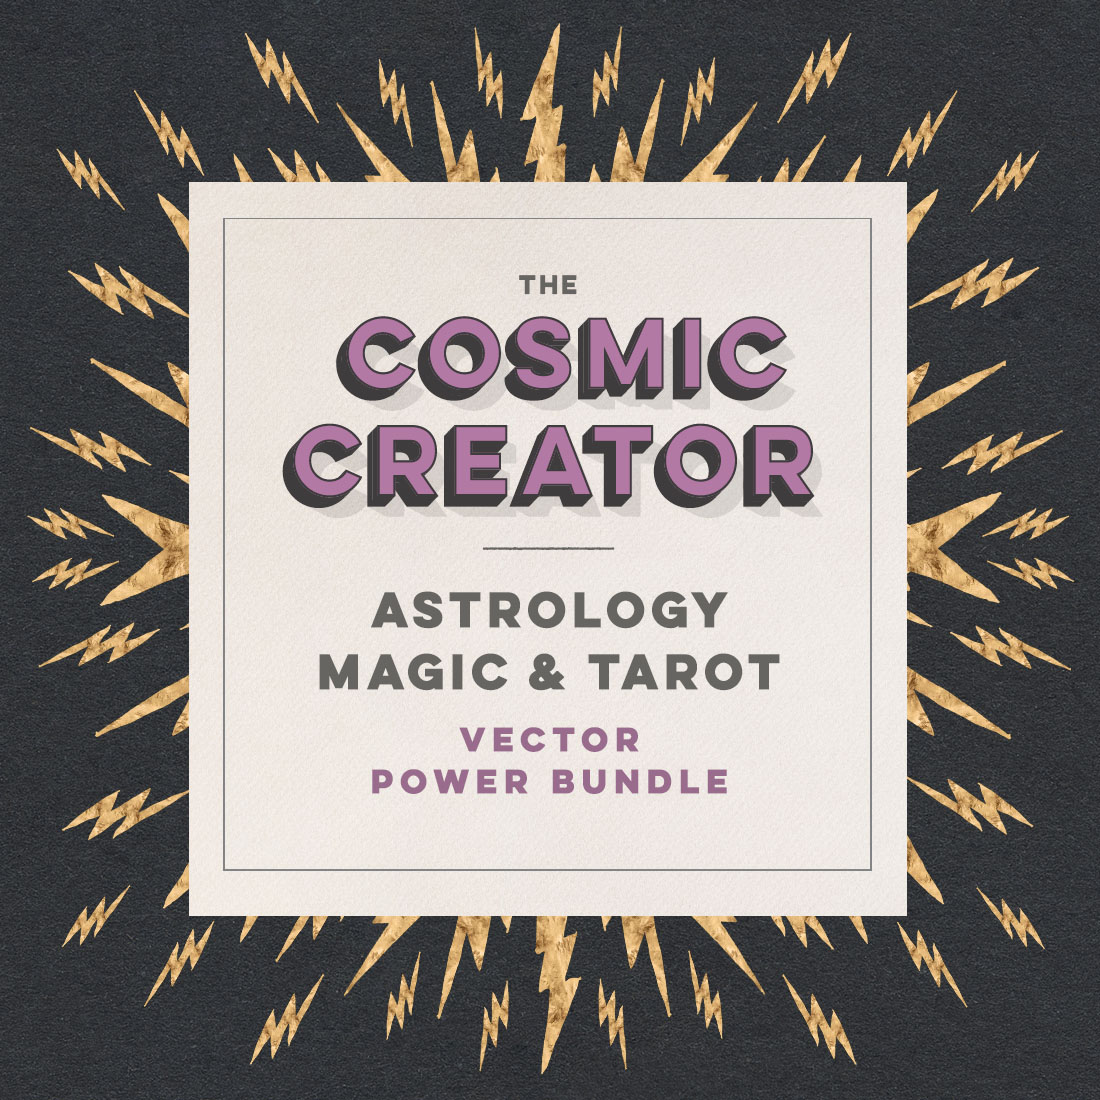 The Cosmic Creator: Astrology Magic & Tarot Vector Power Bundle cover image.